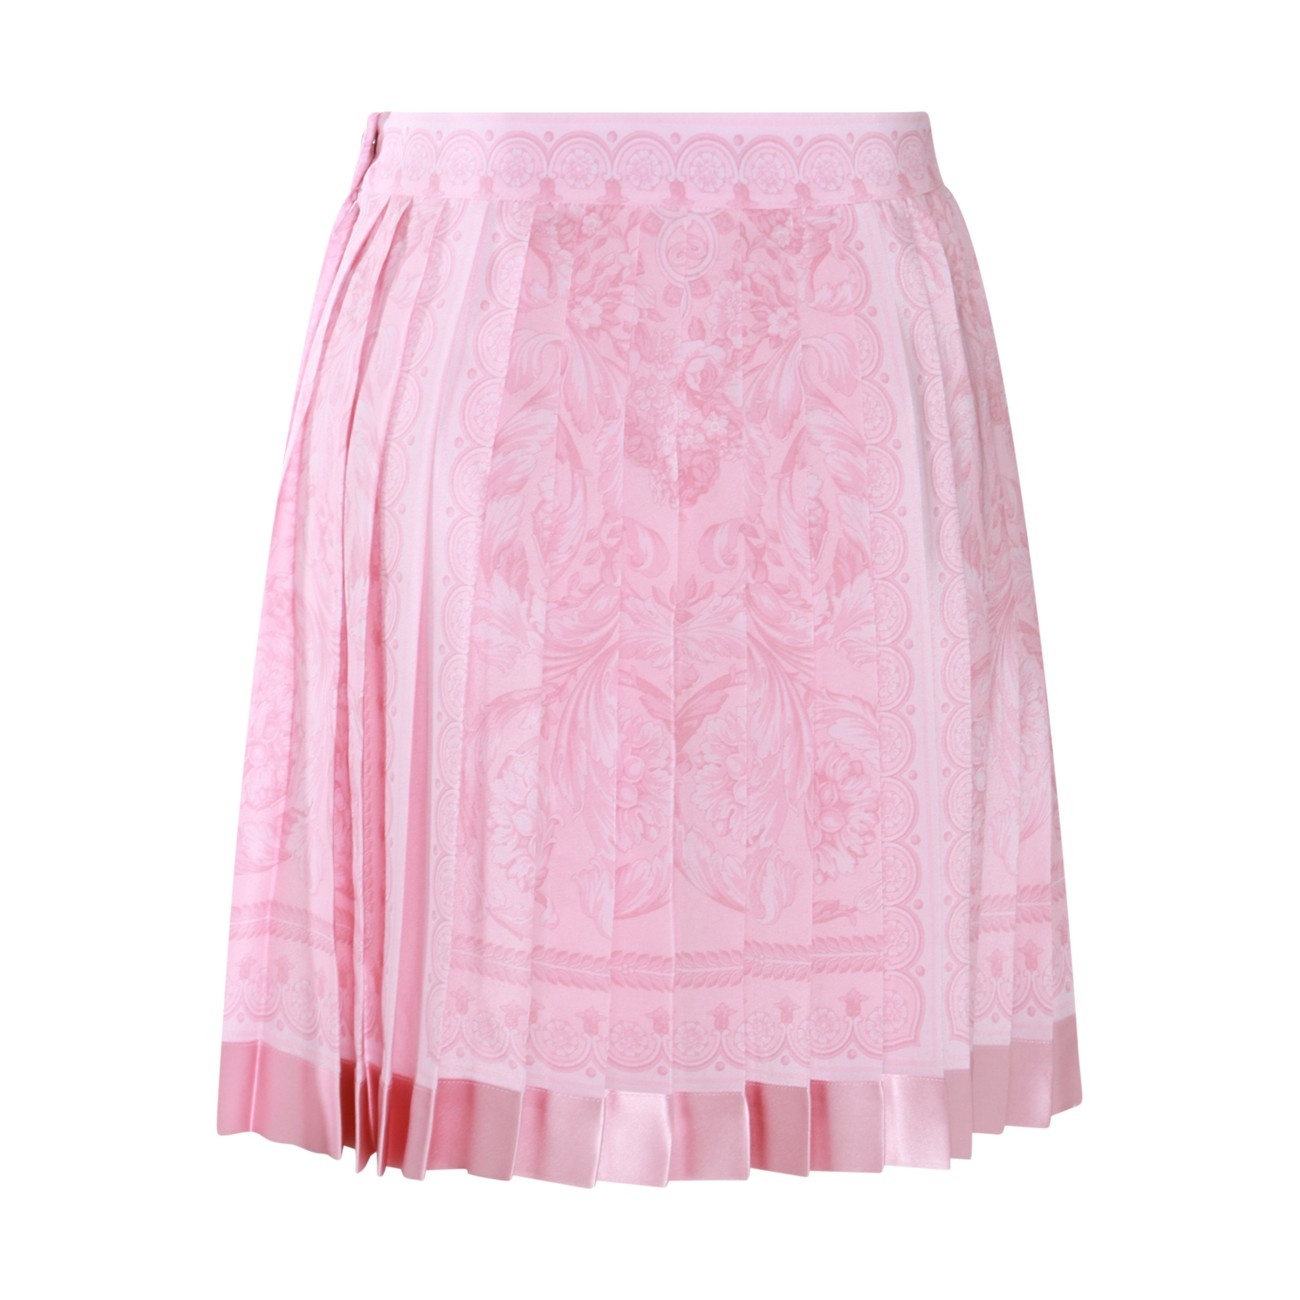 pink silk barocco skirt - 2